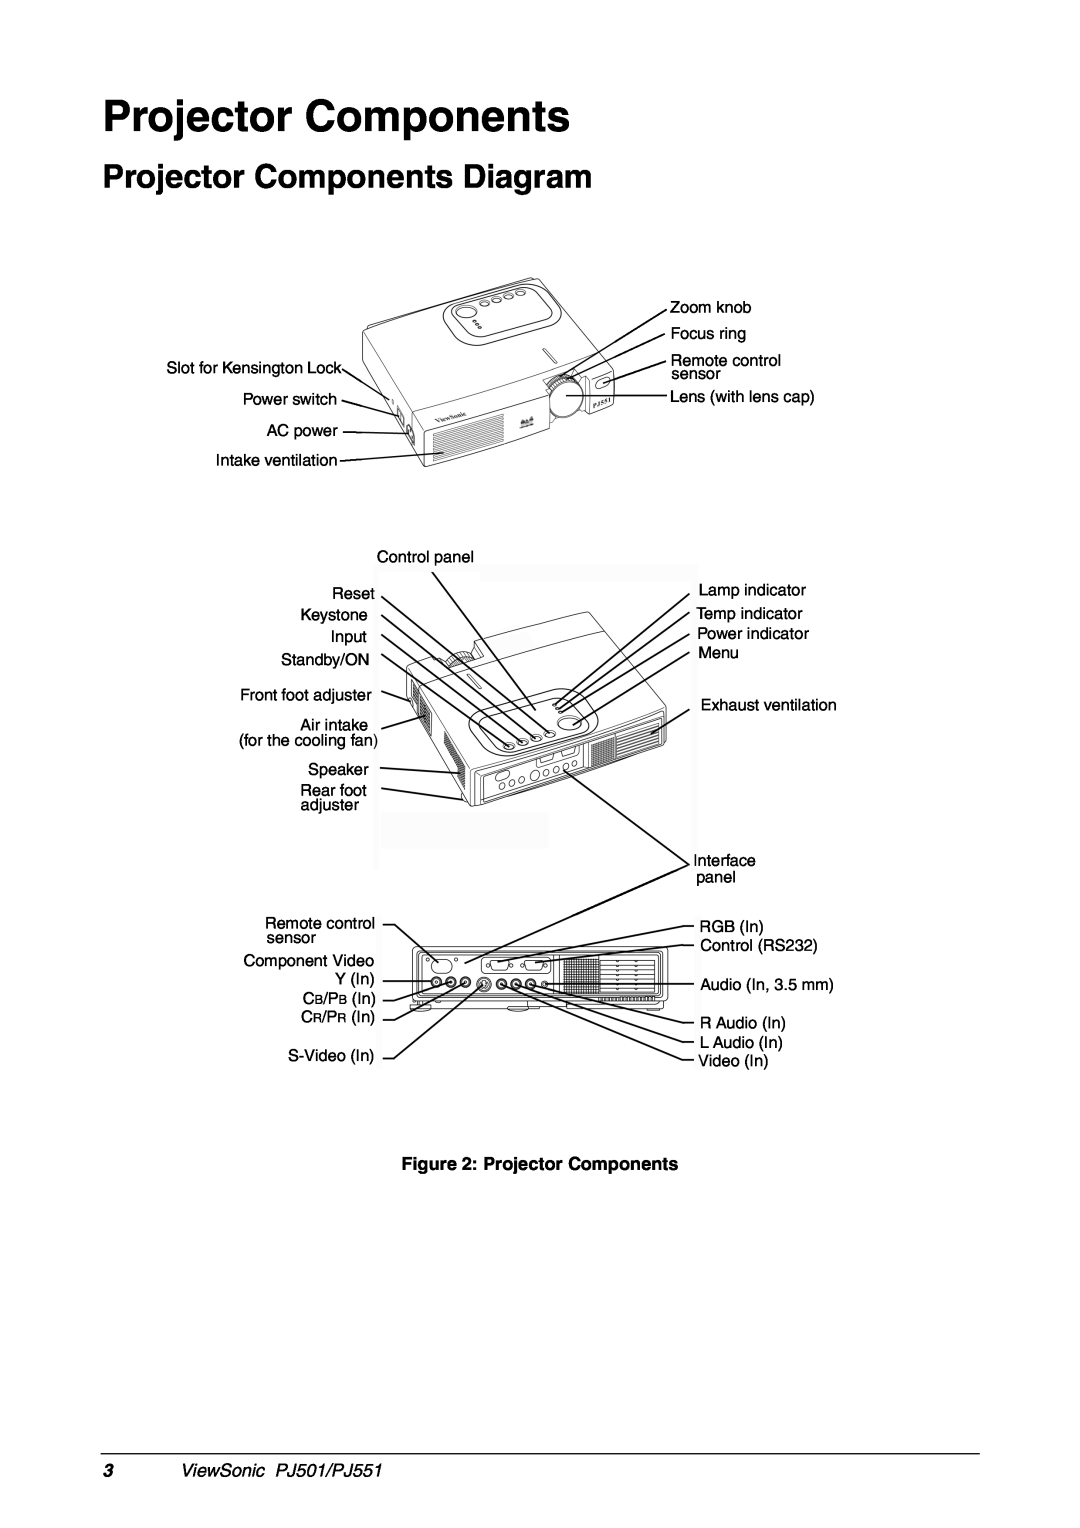 ViewSonic manual Projector Components Diagram, ViewSonic PJ501/PJ551 